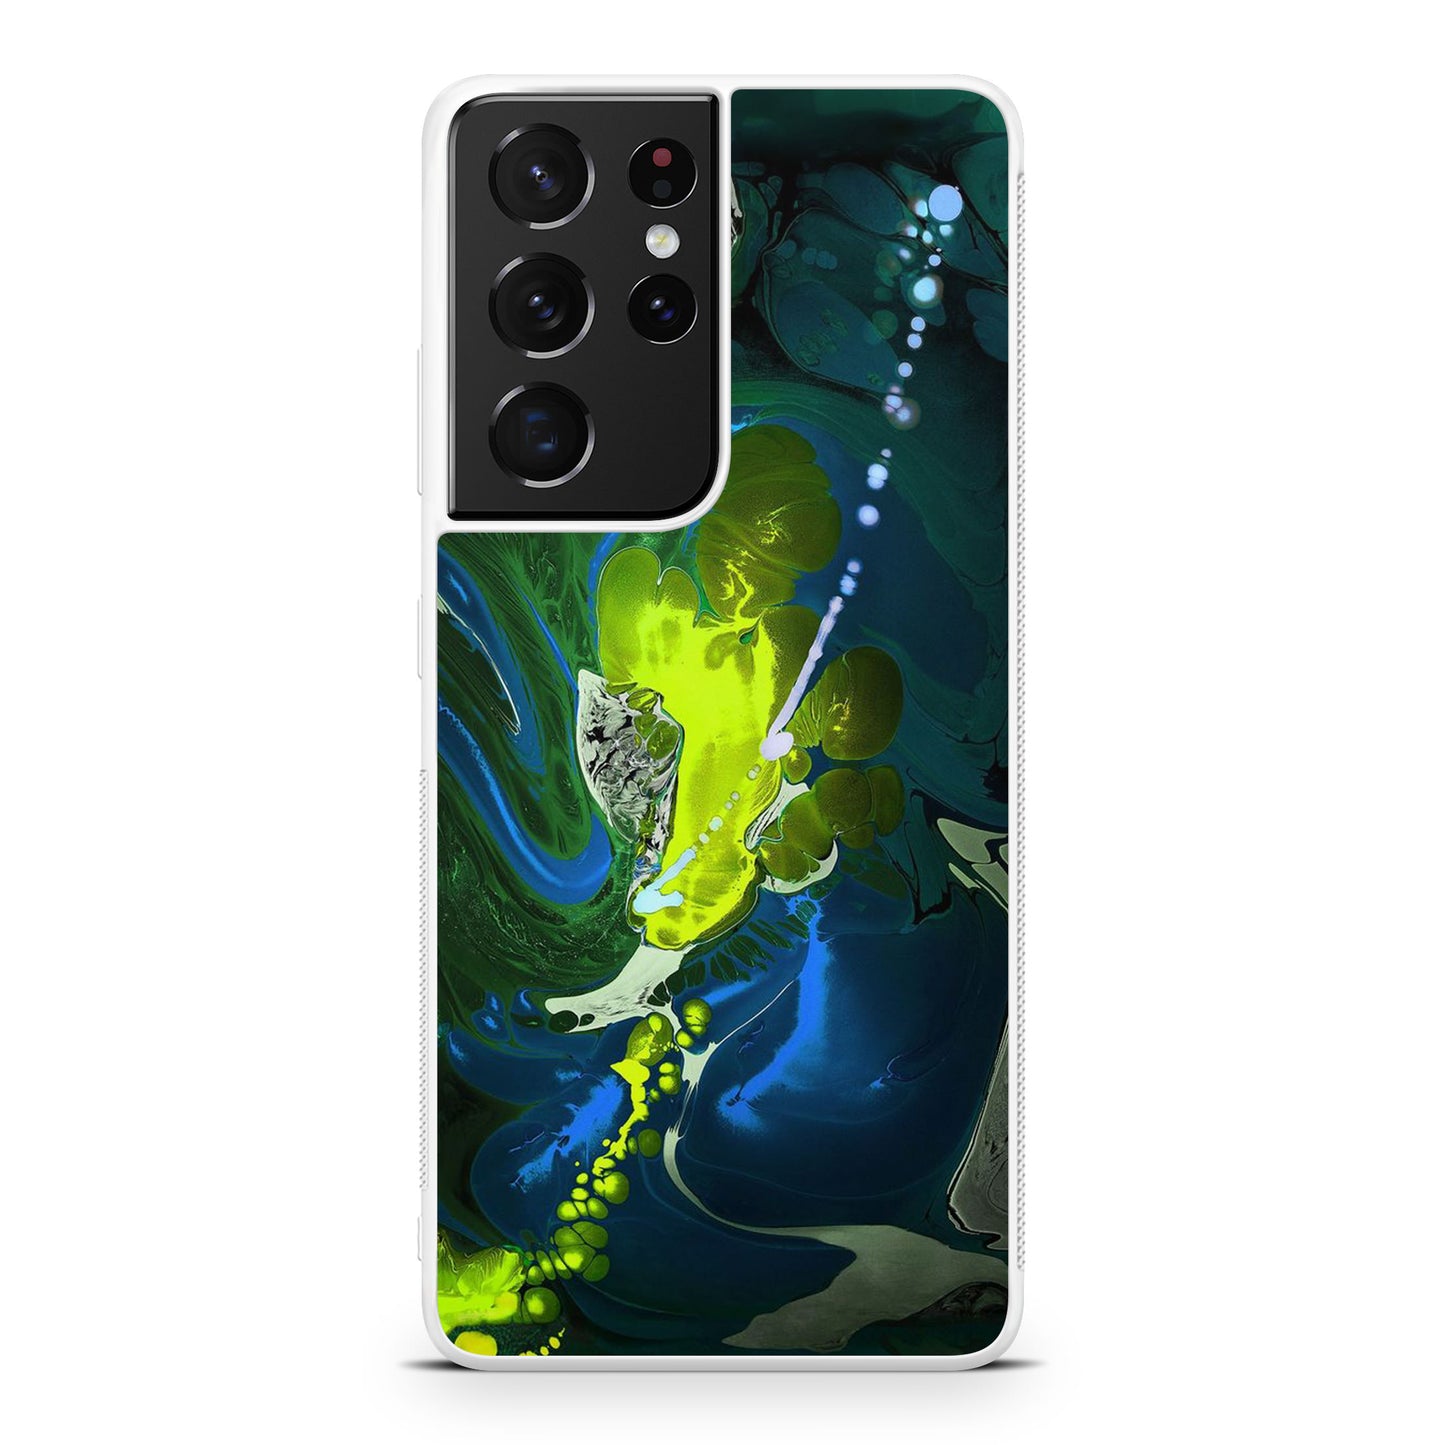 Abstract Green Blue Art Galaxy S21 Ultra Case